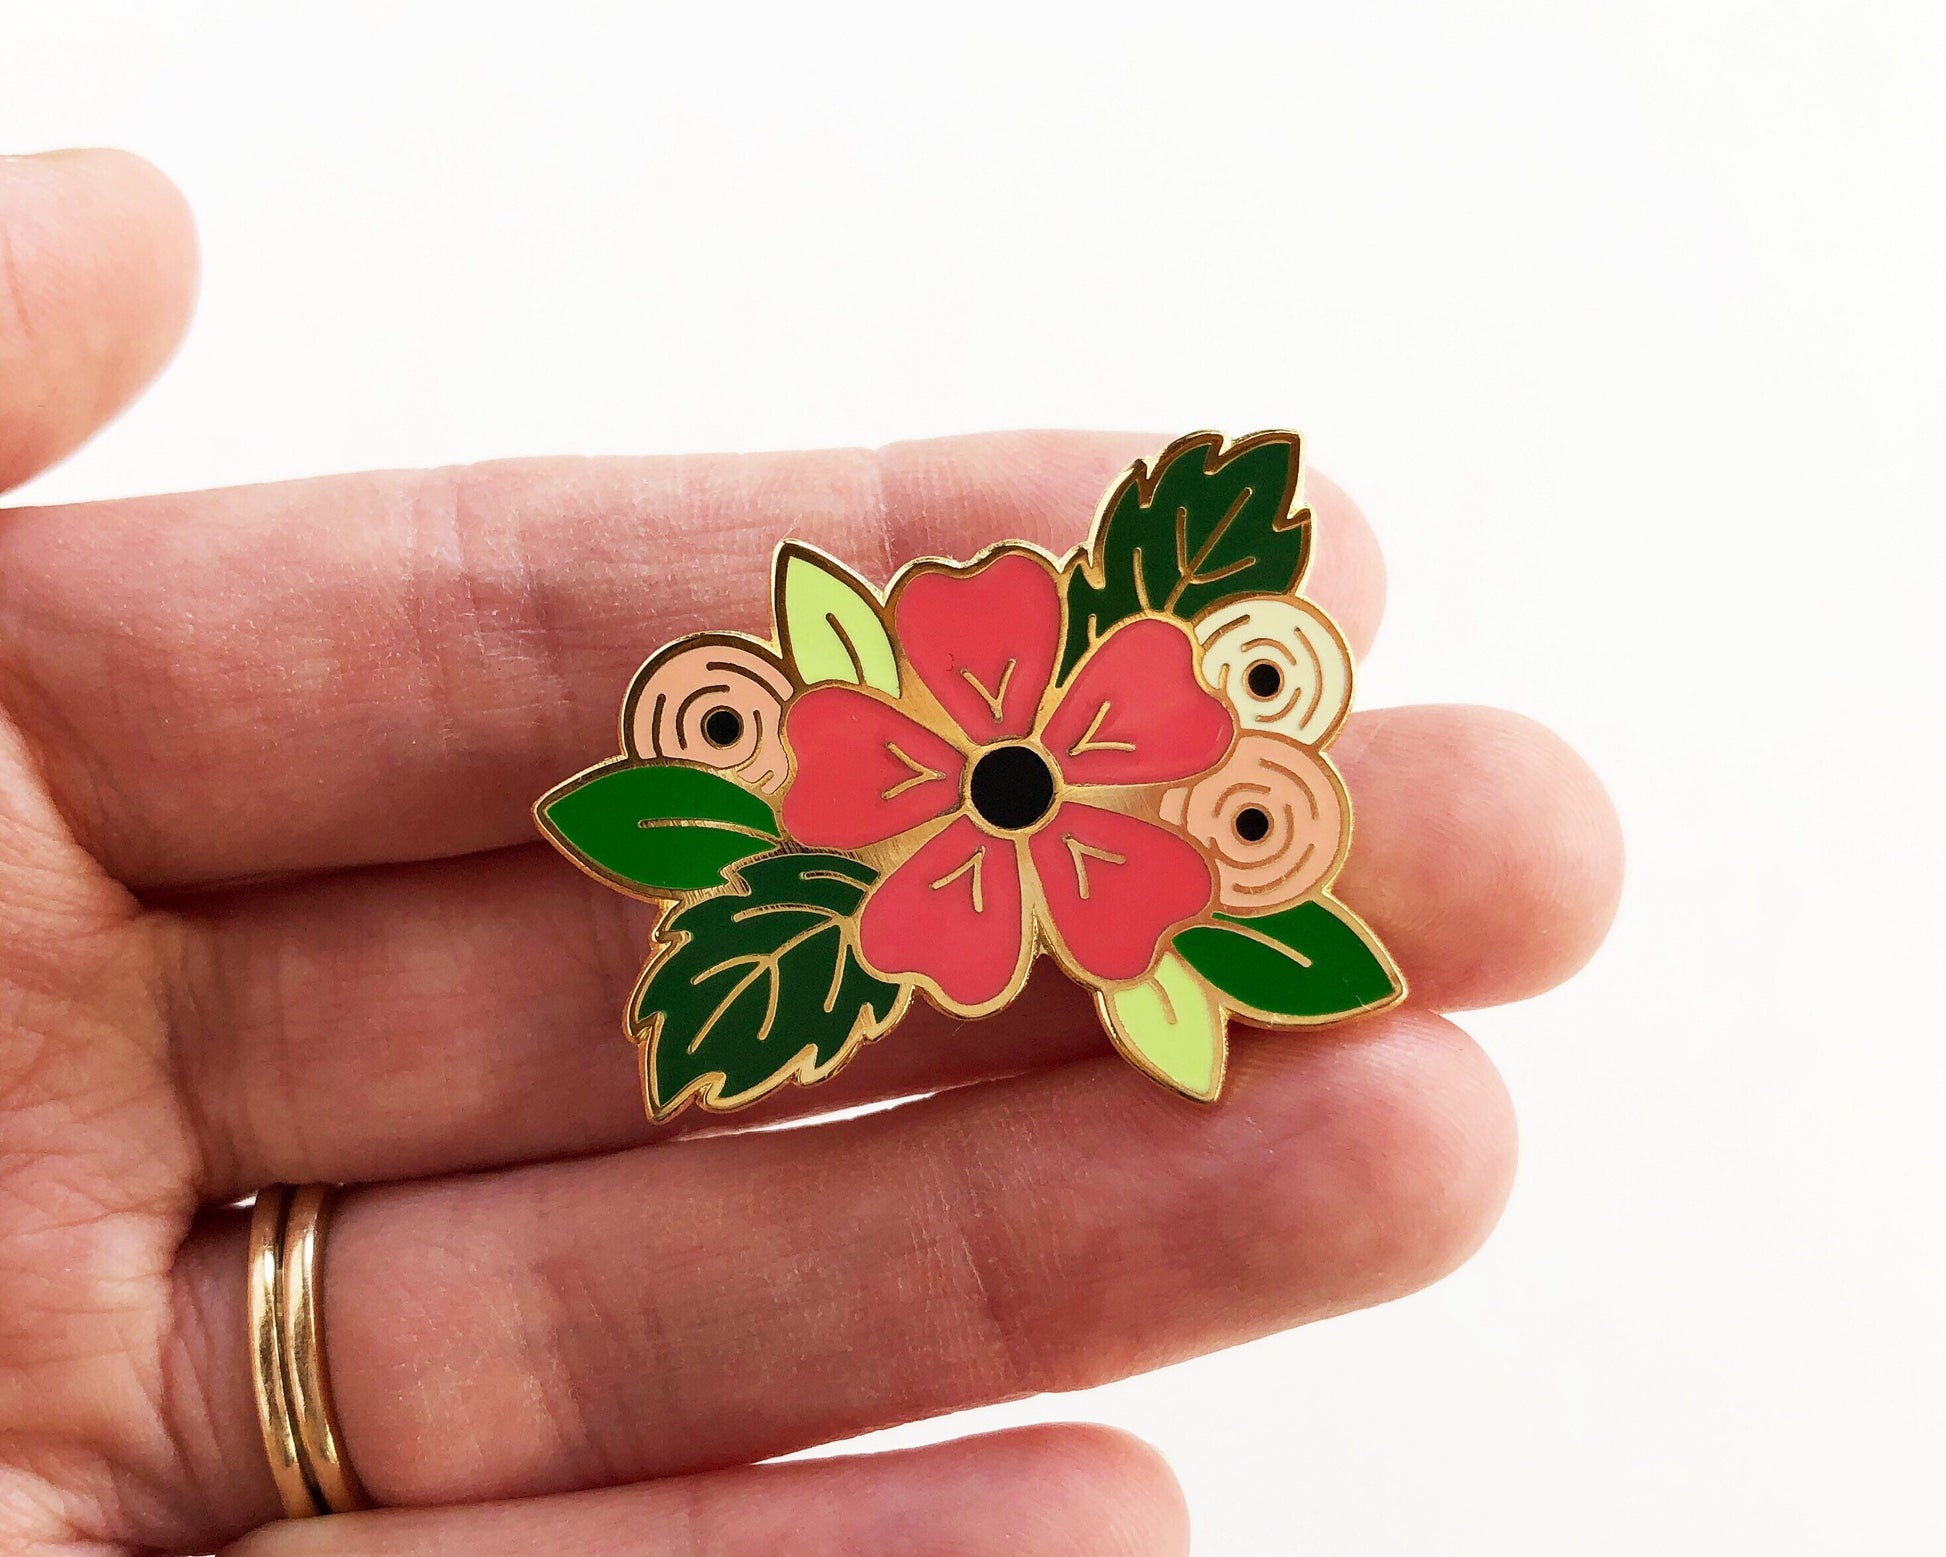 Floral enamel pin, Enamel pin, lapel pin, flower pin, floral clothing accessory